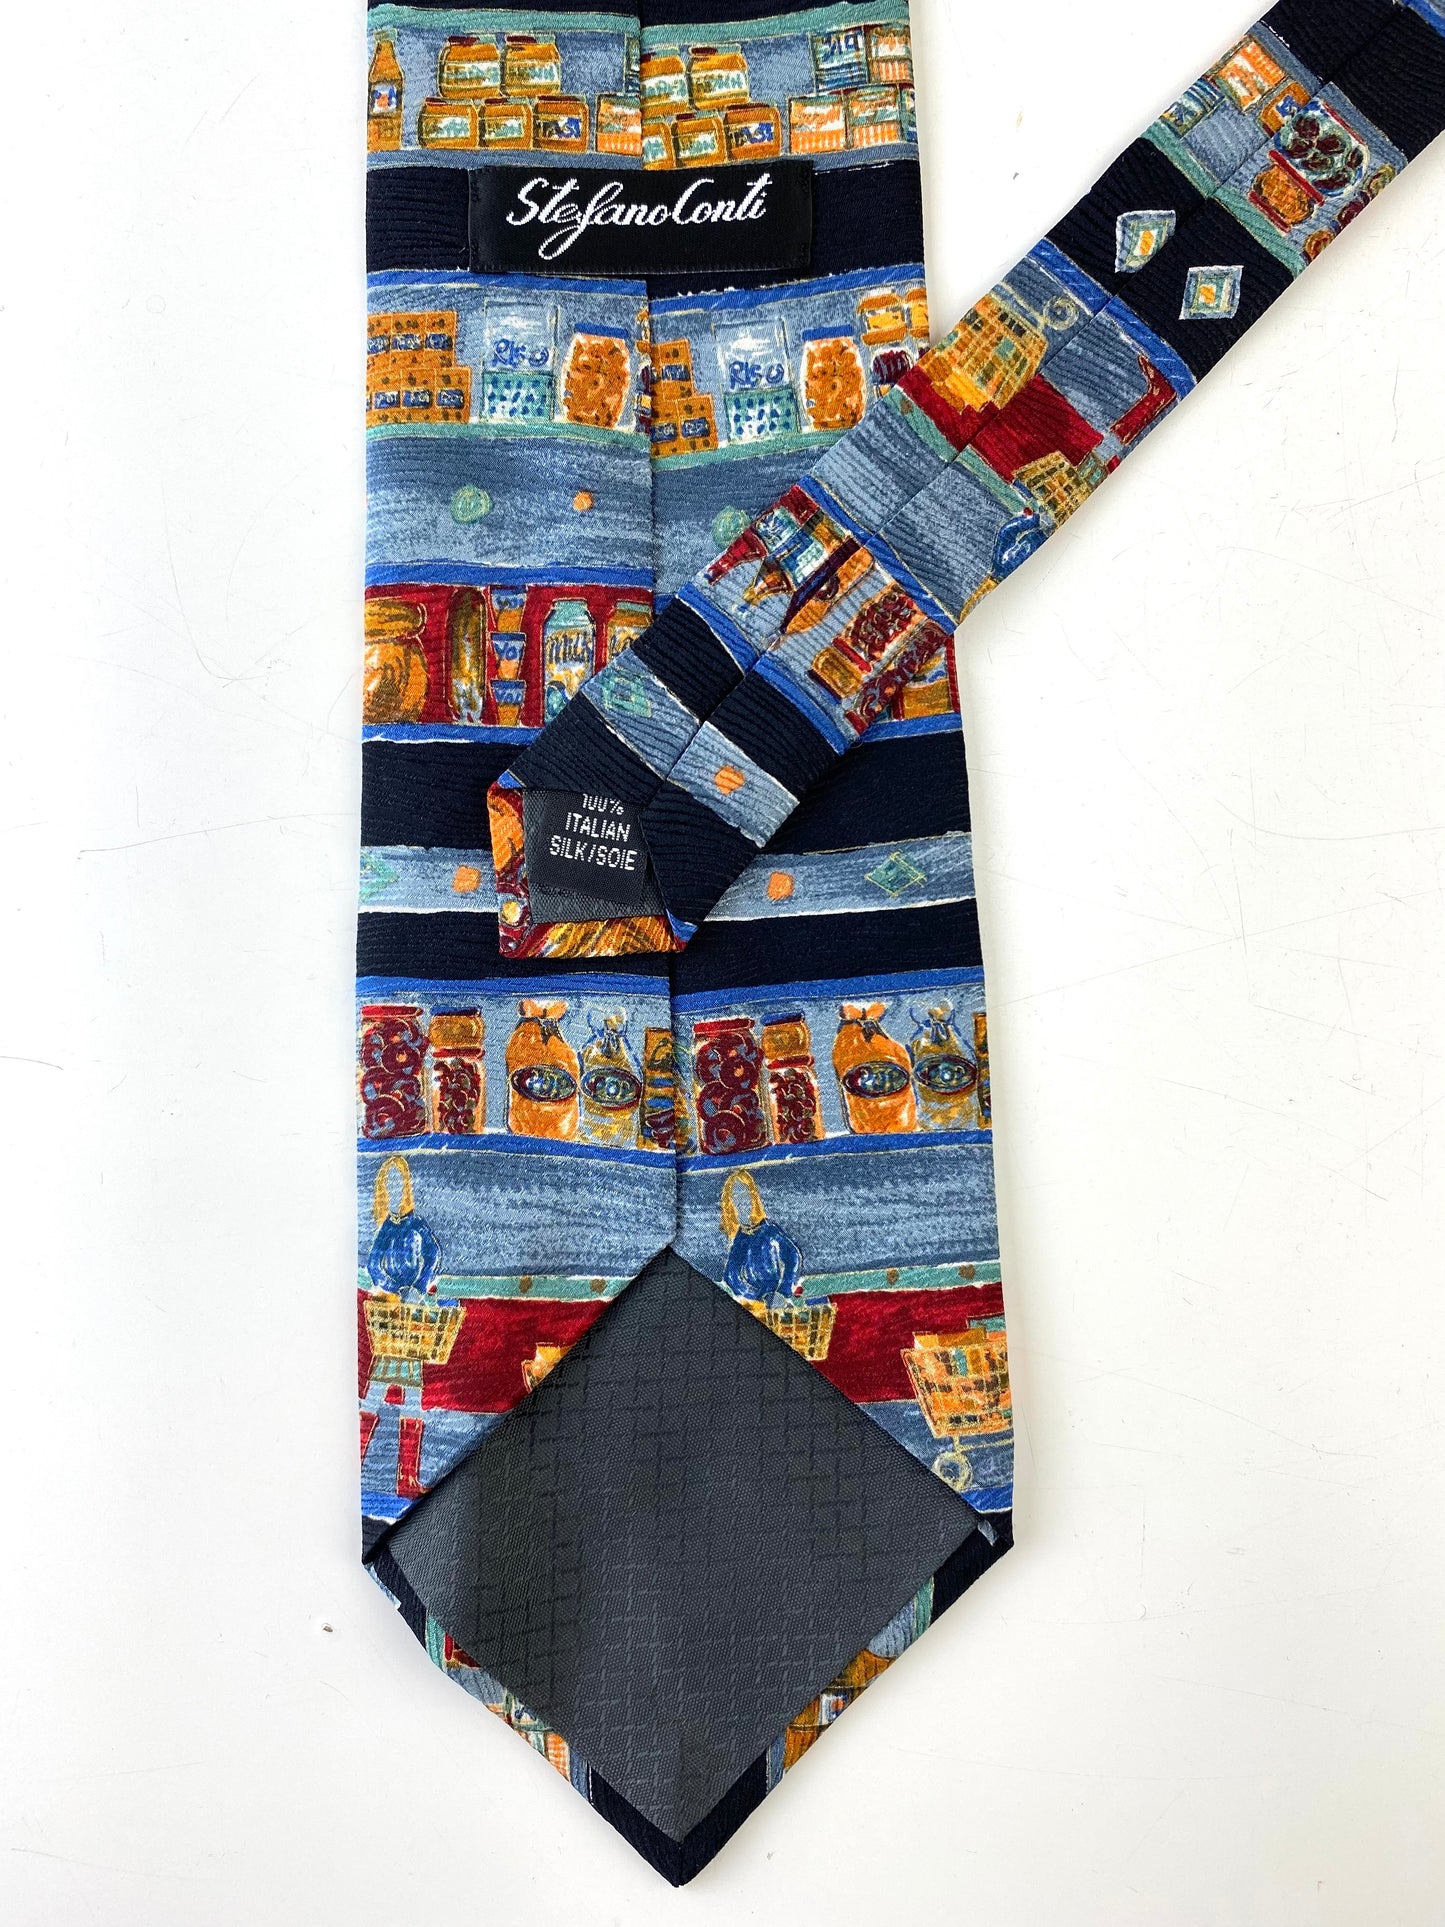 90s Deadstock Silk Necktie, Men's Vintage Black/ Blue/ Red Grocery Shopping Print Tie, NOS